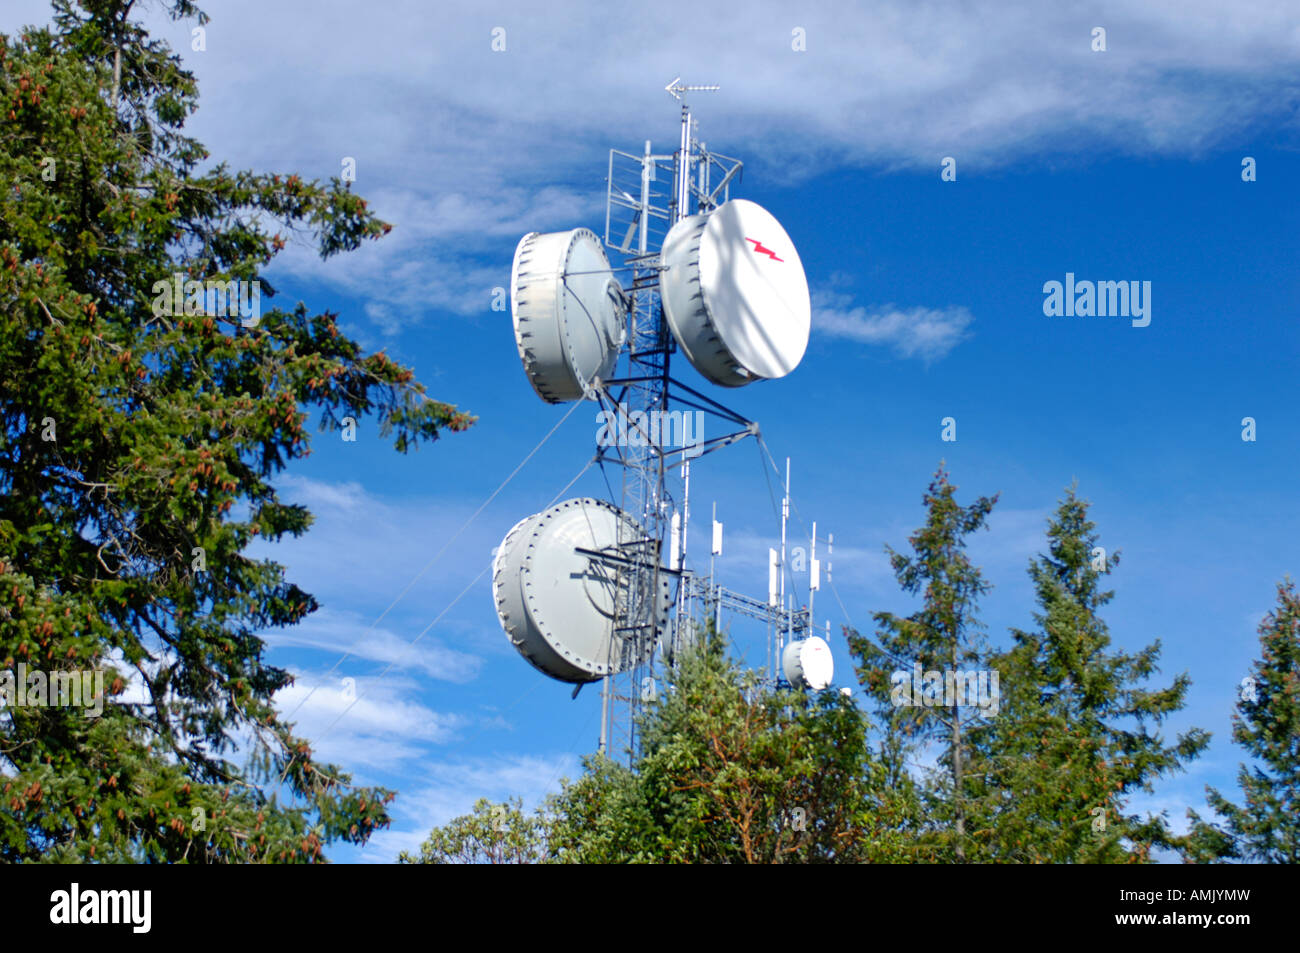 https://c8.alamy.com/comp/AMJYMW/telecommunications-masts-antennae-aerials-microwave-dishes-AMJYMW.jpg